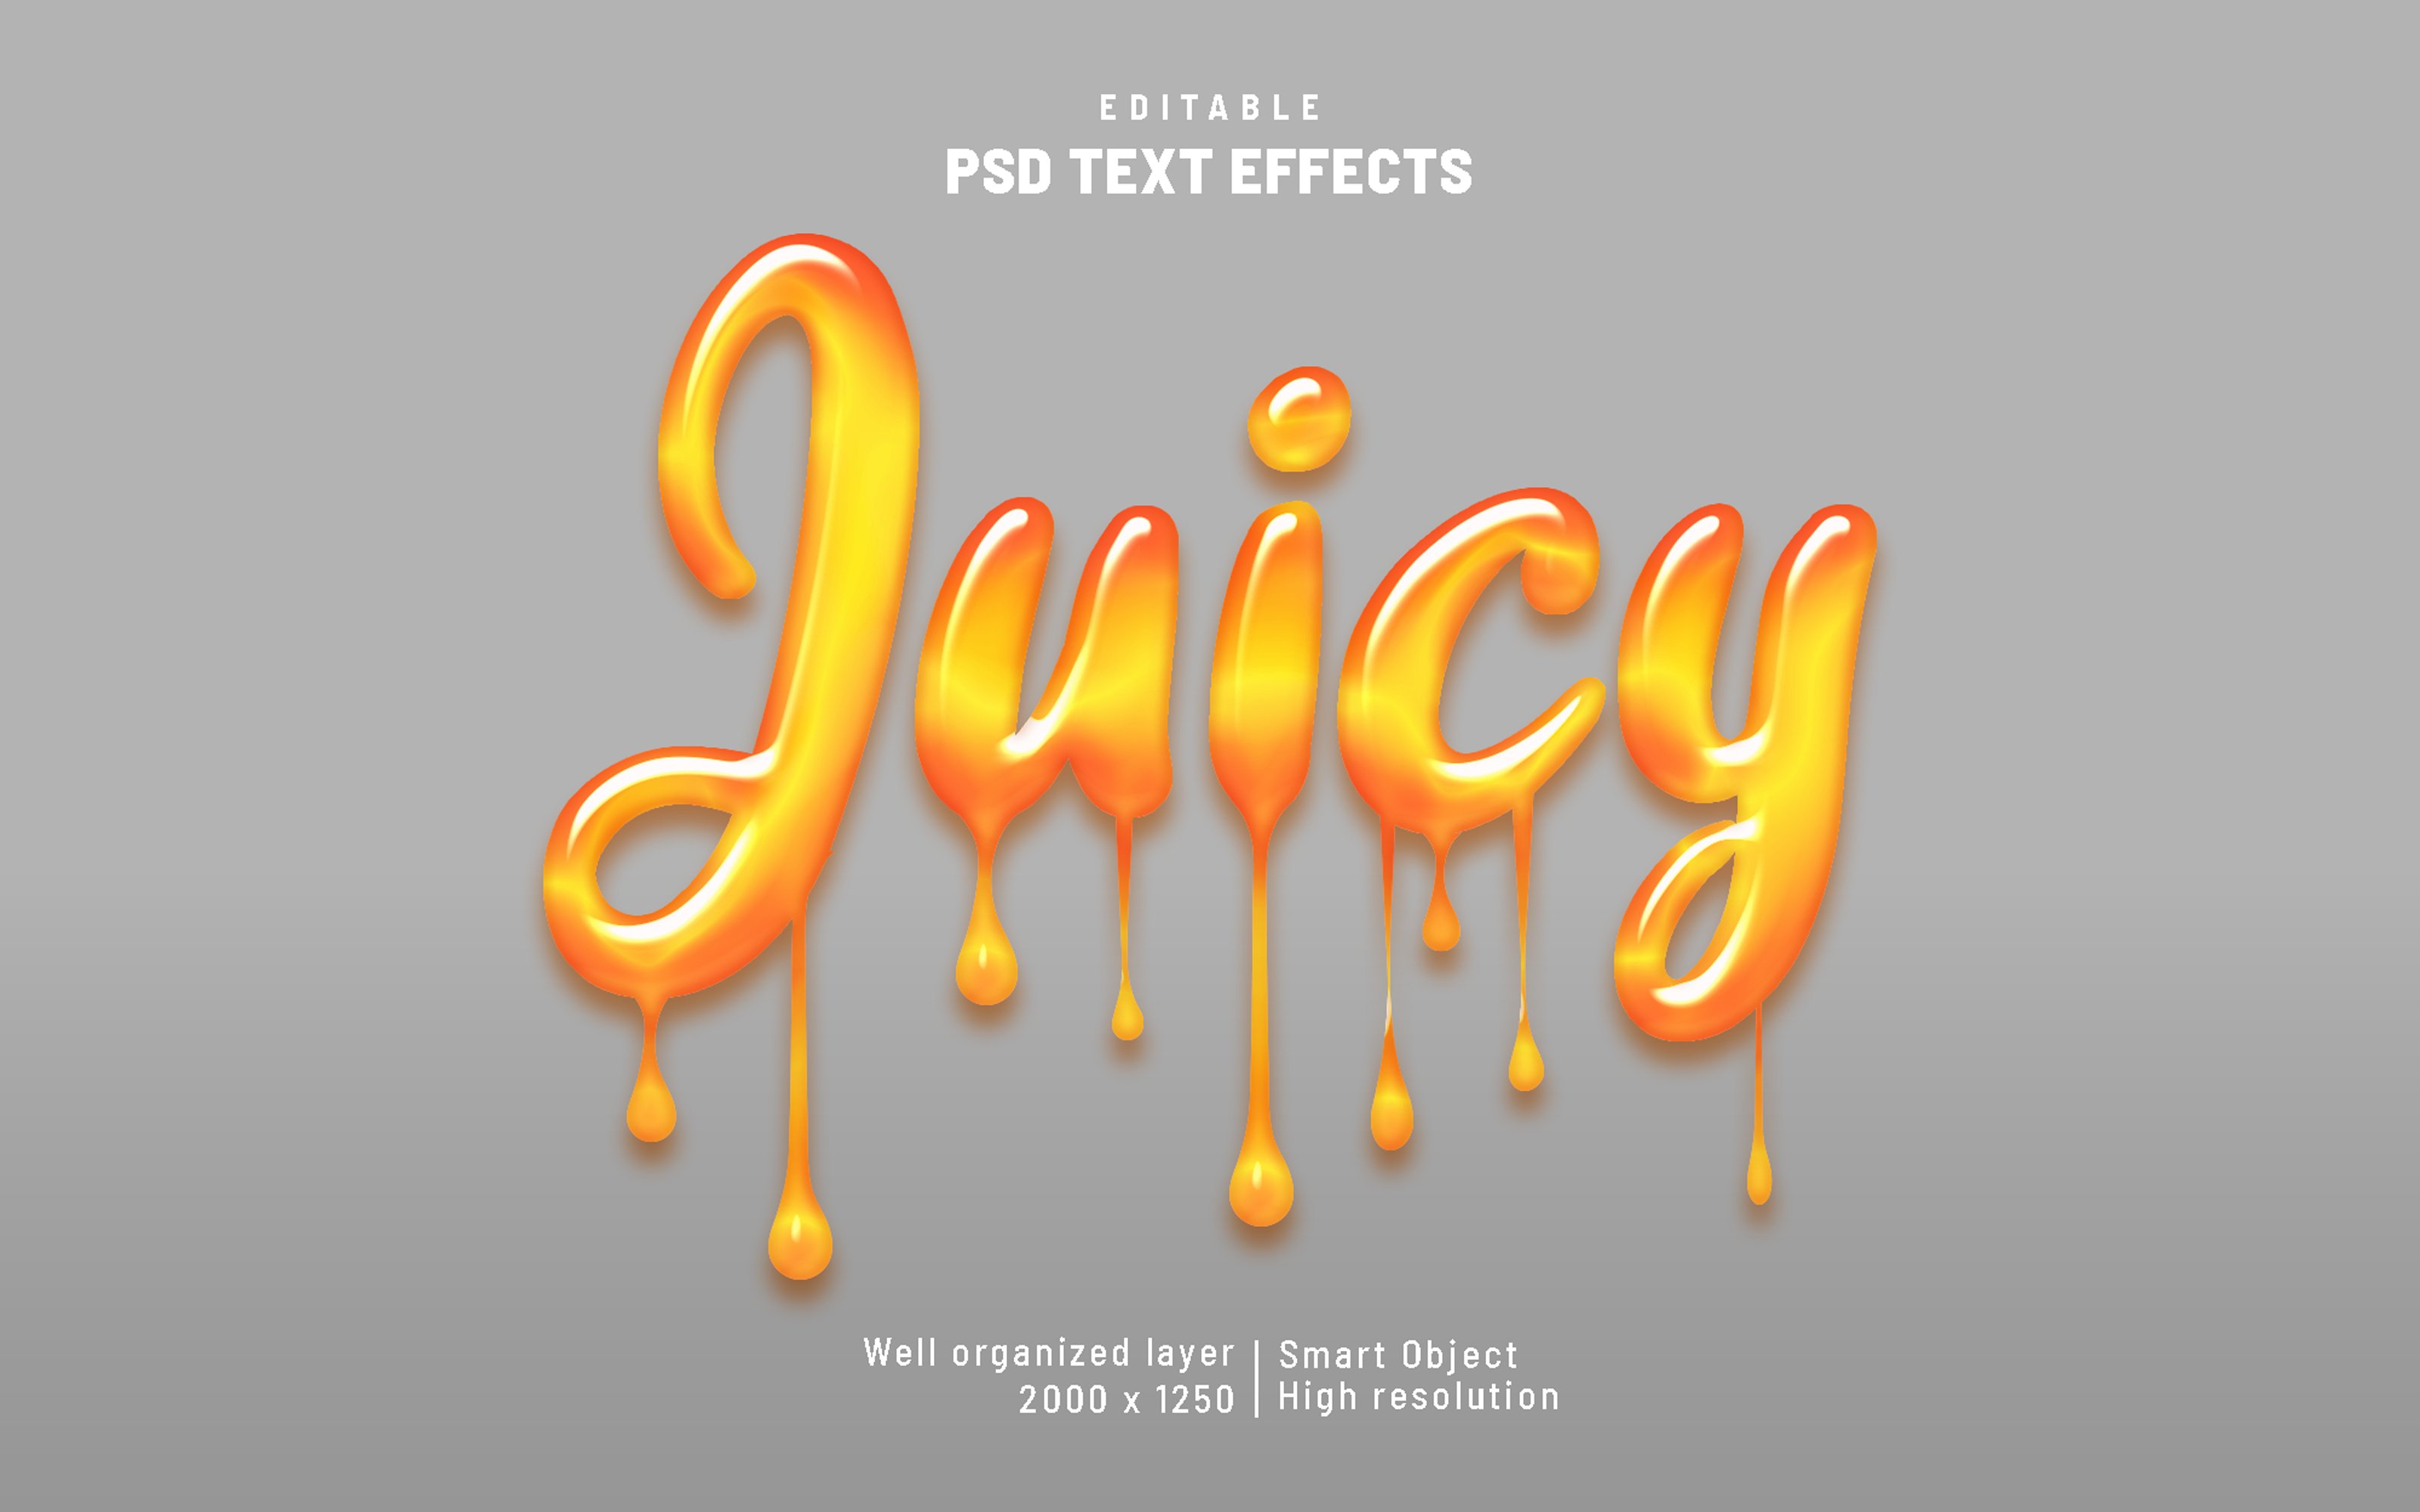 Juicy liquid editable text effectcover image.